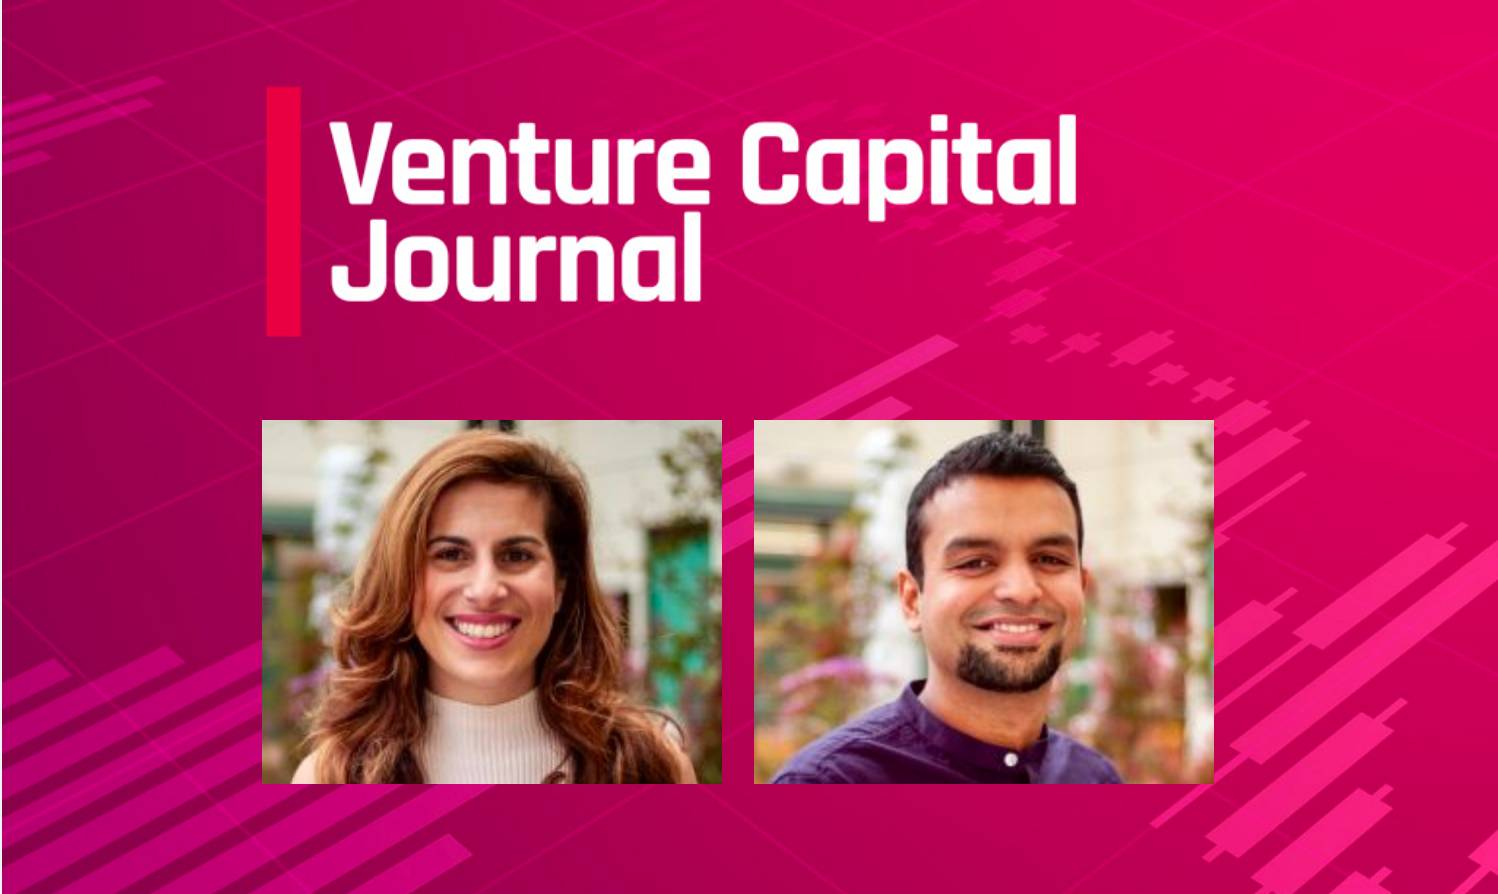 Venture Capital Journal